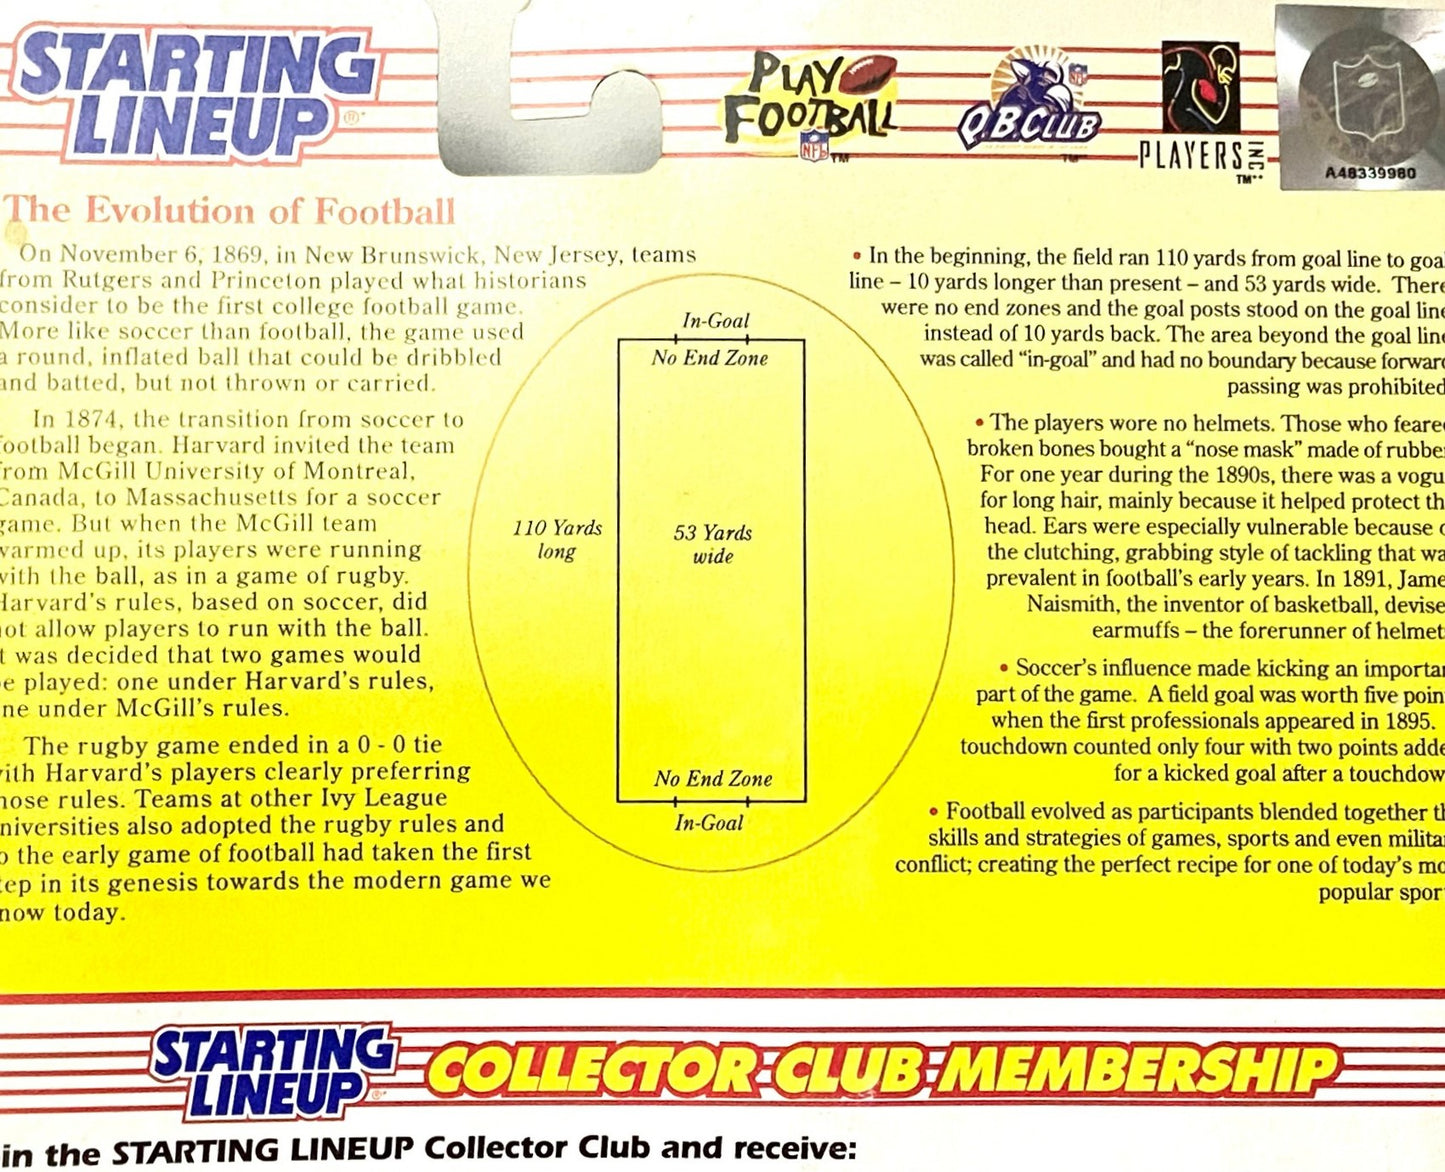 Gus Frerotte 1998 NFL Washington Football Team Starting Lineup Figurine by Kenner